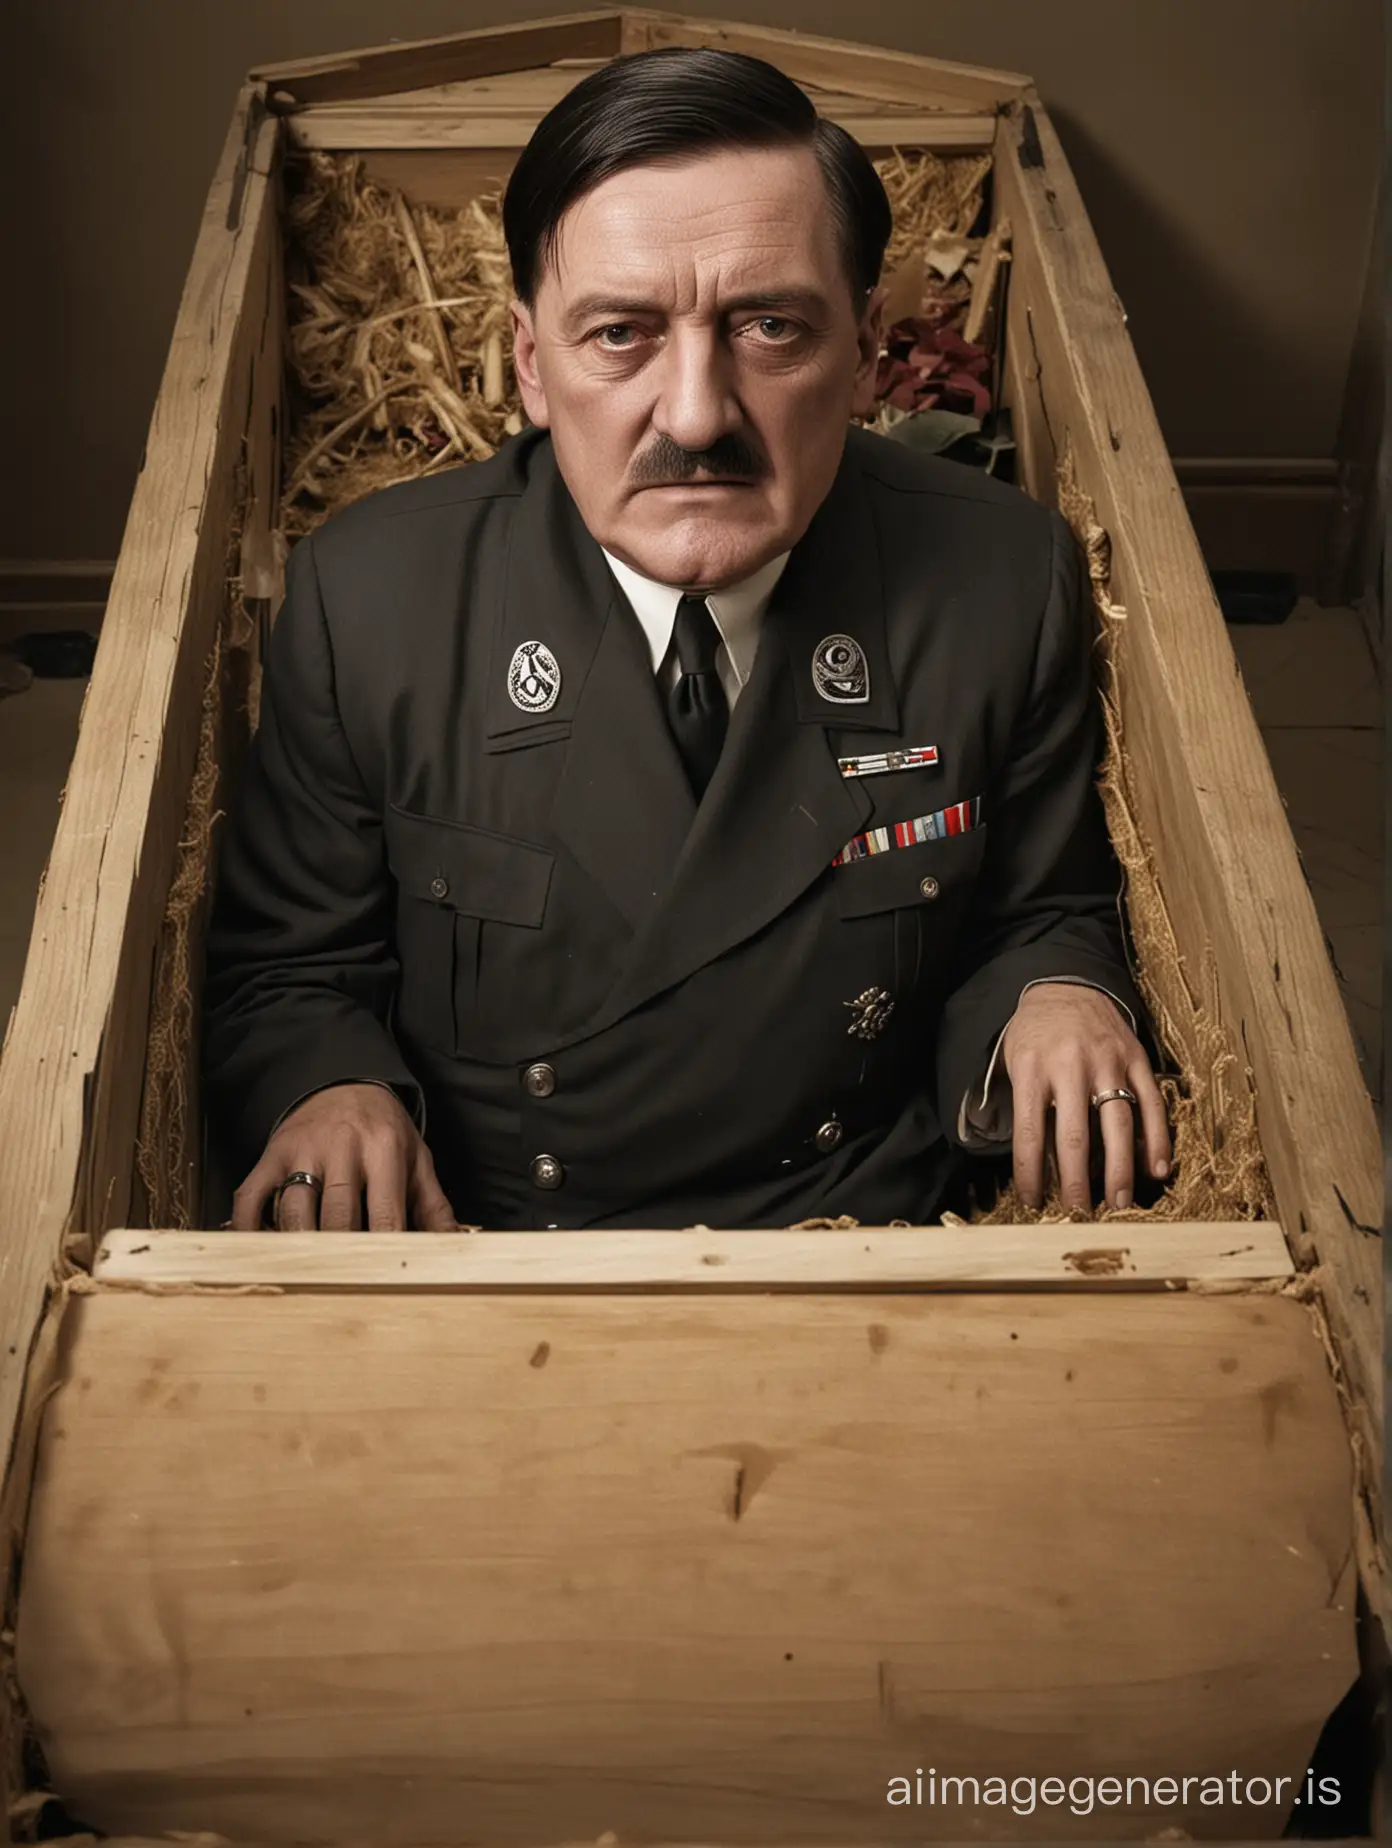 Dead Hitler lies in a coffin